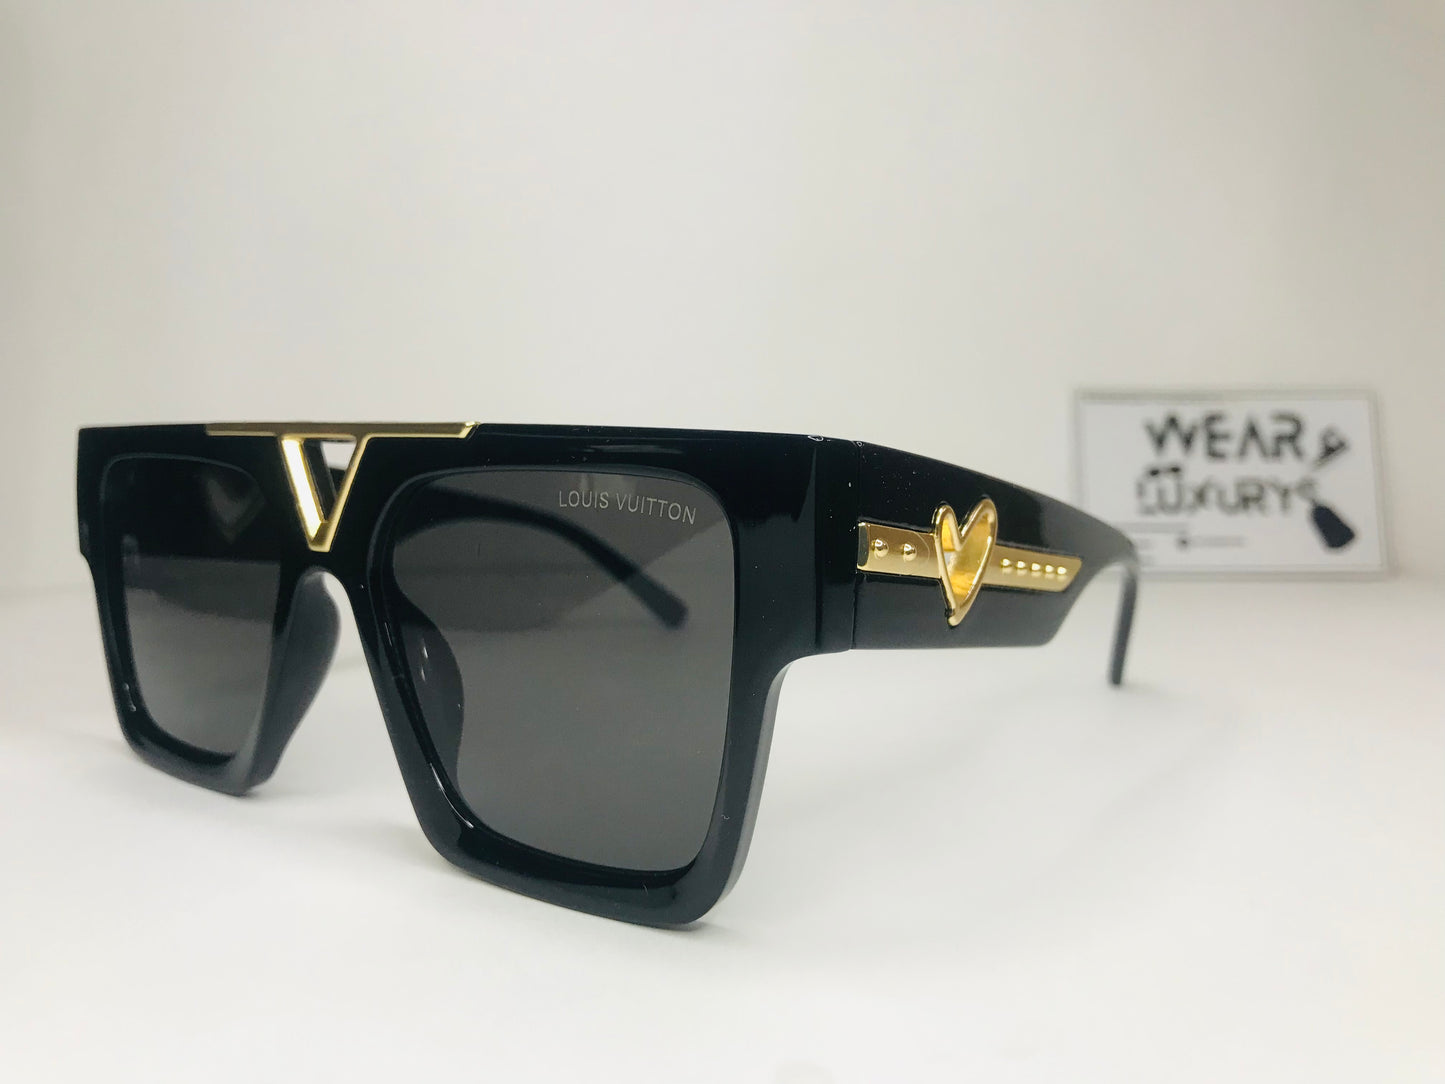 Lv newest sunglasses